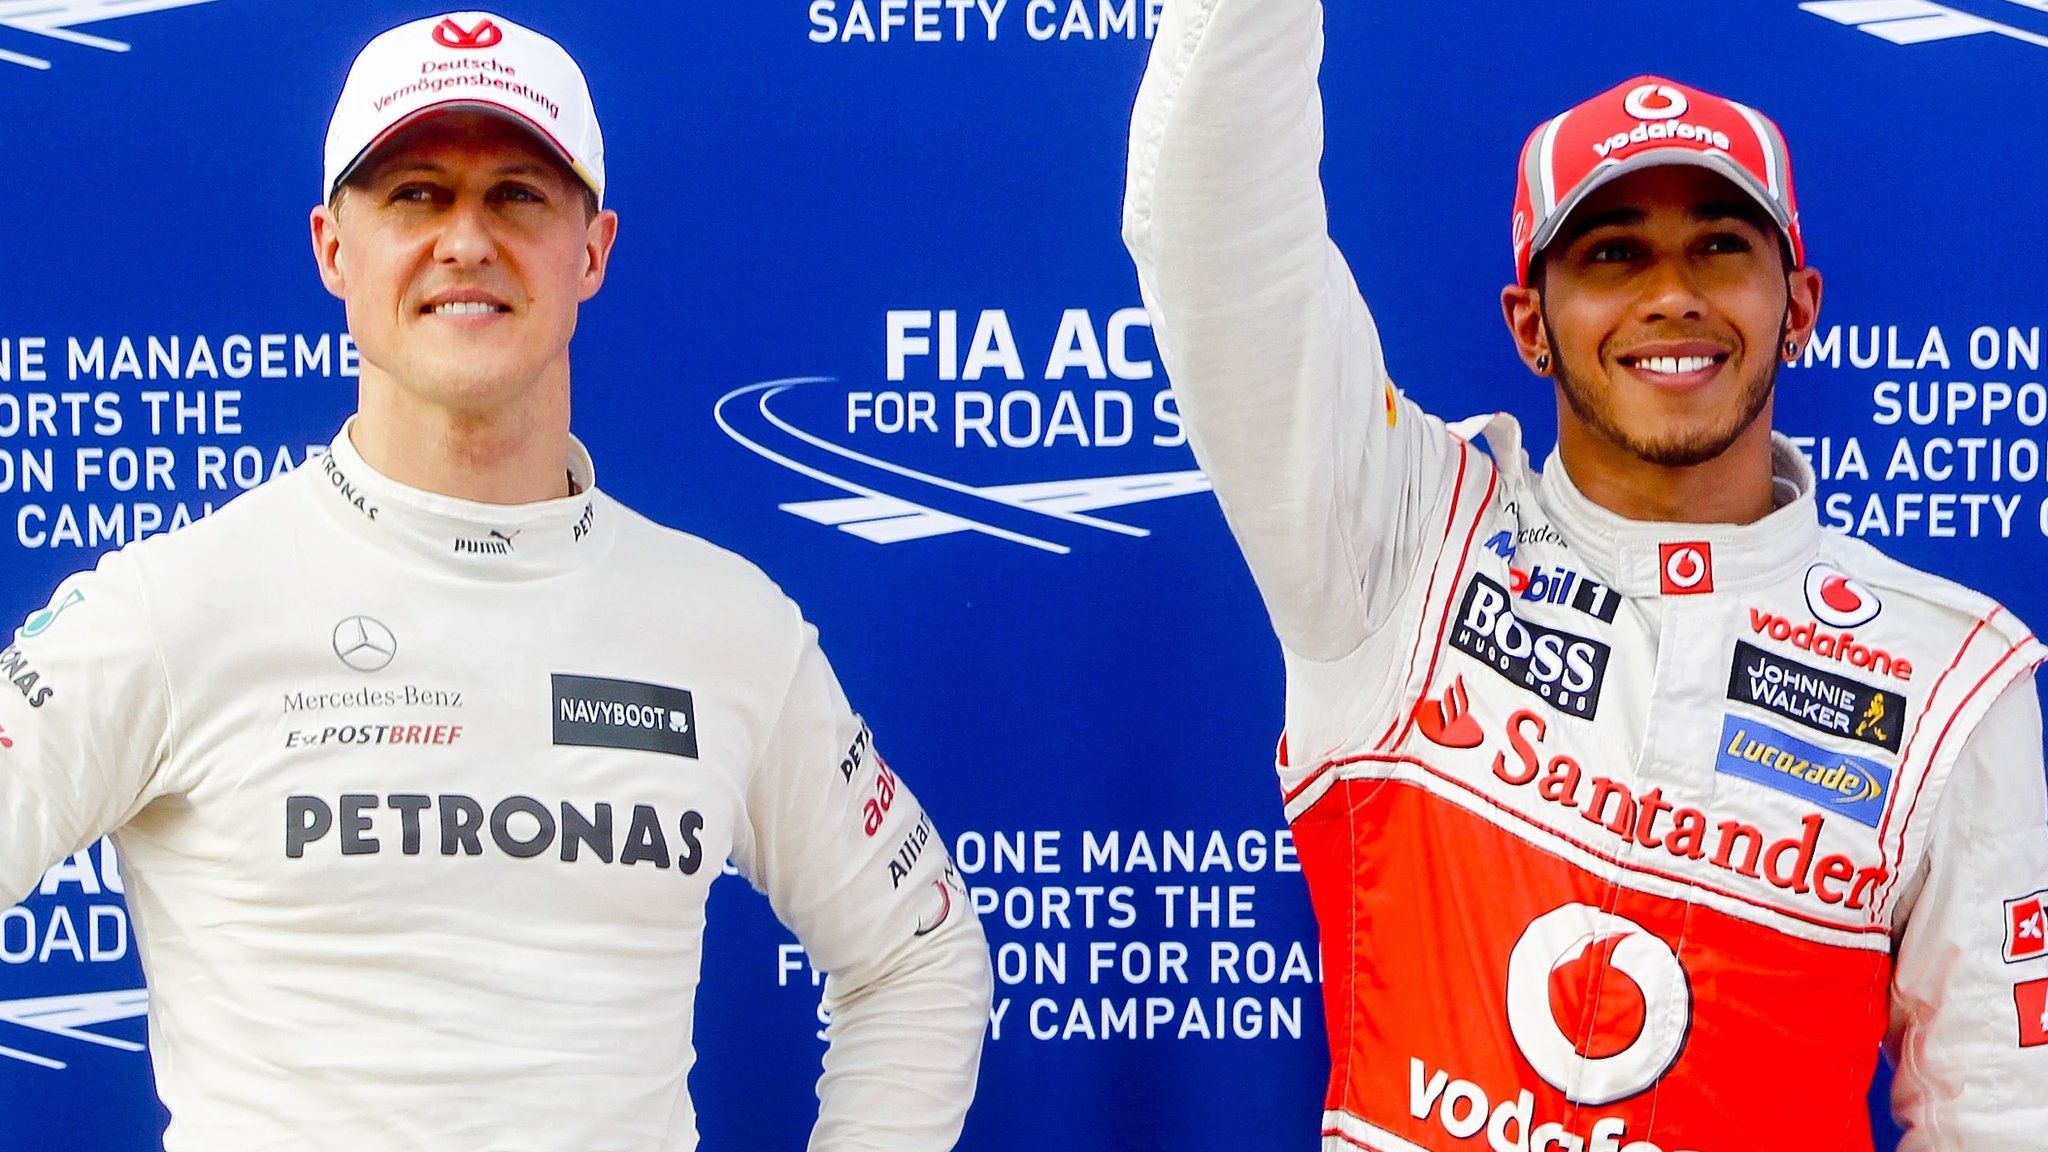 Michael Schumacher and Lewis Hamilton in 2012